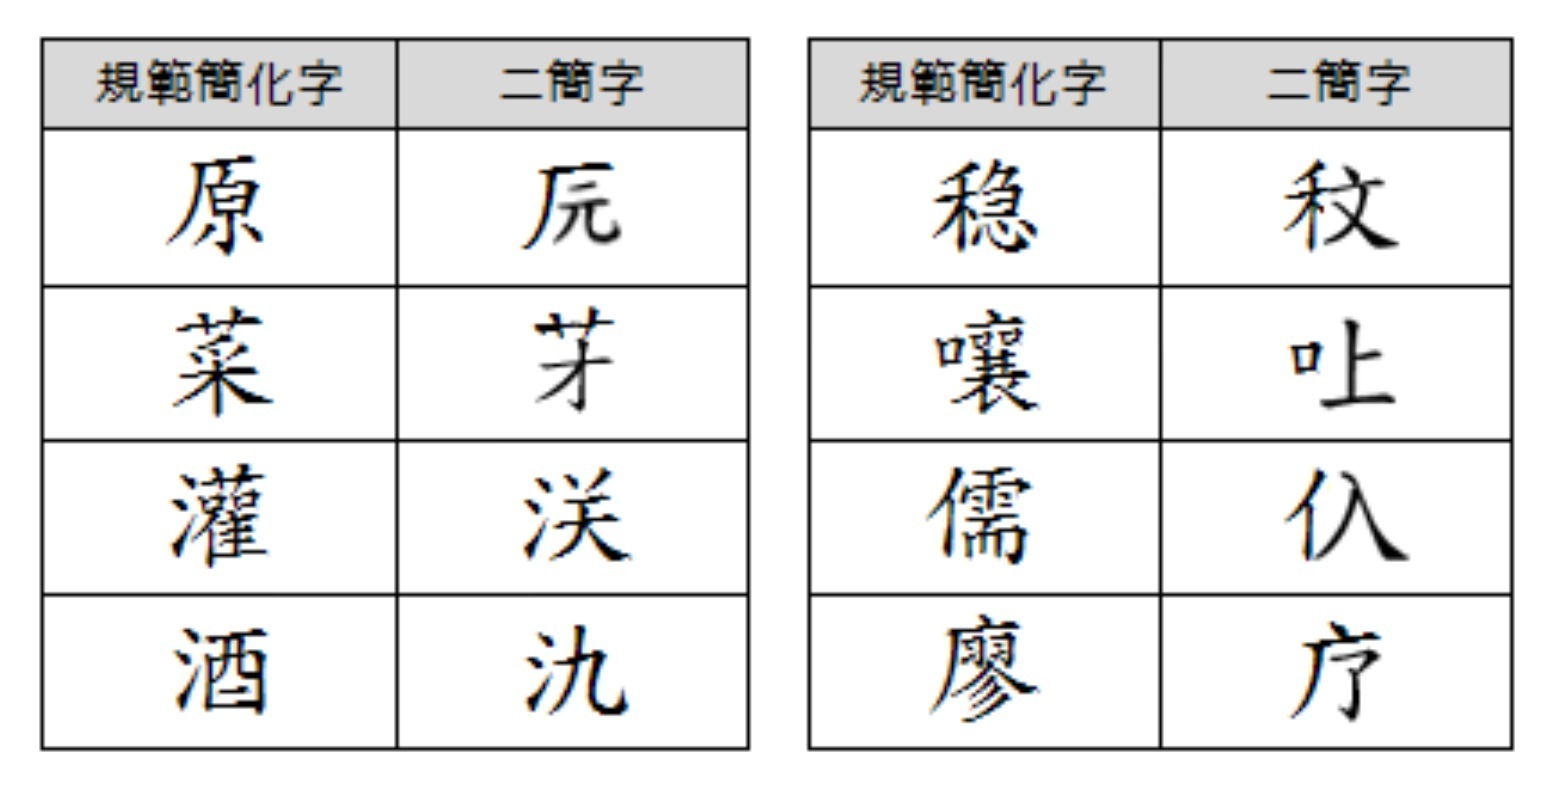 PPT - 神奇的汉字 ( 二 ) PowerPoint Presentation, free download - ID:3527646